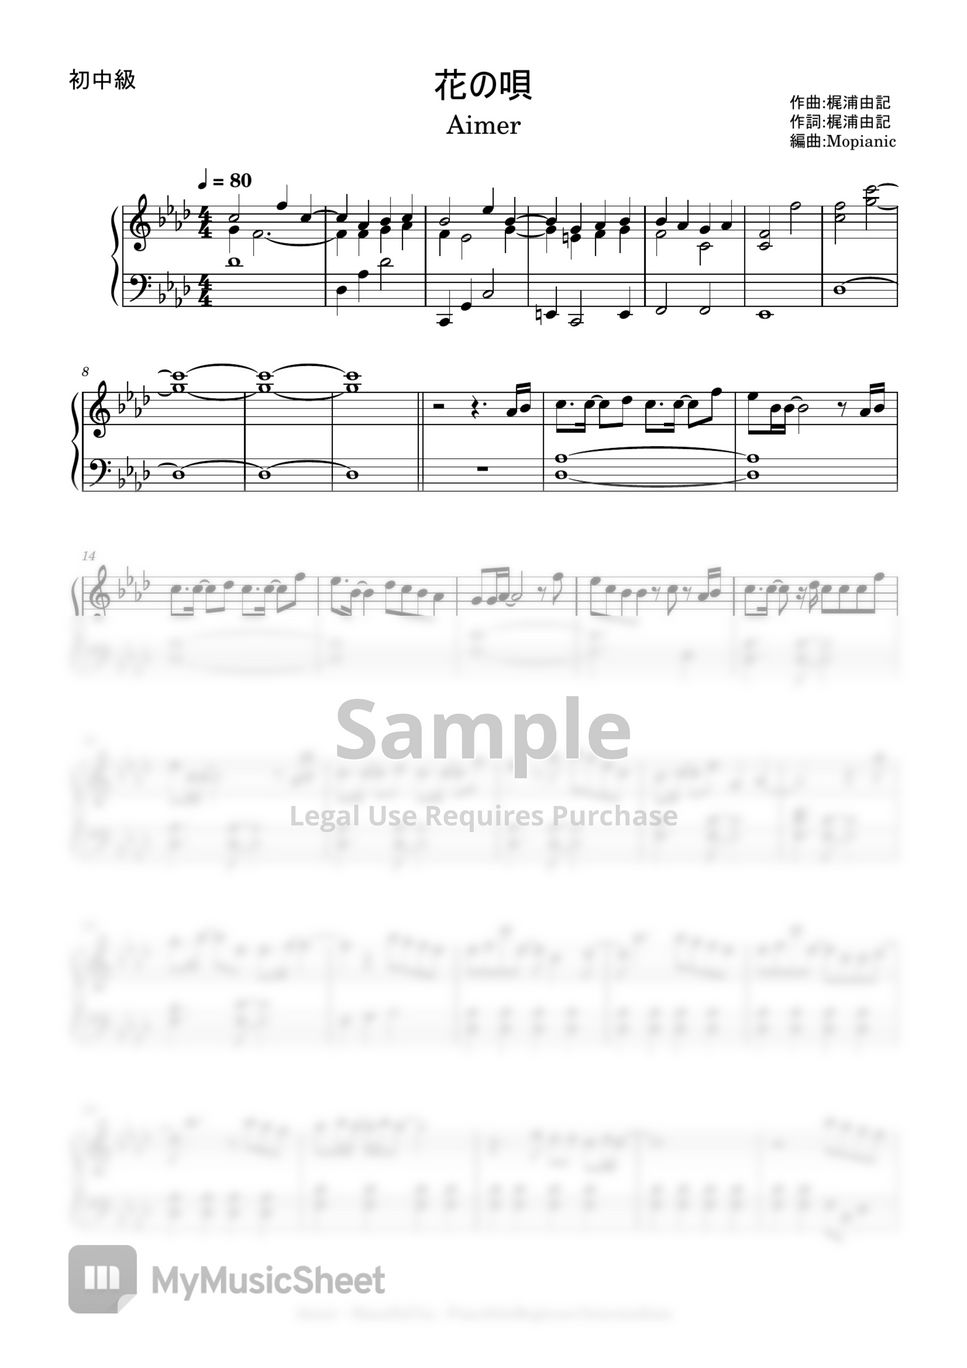 Aimer - Hana no Uta (beginner to intermediate, piano) by Mopianic